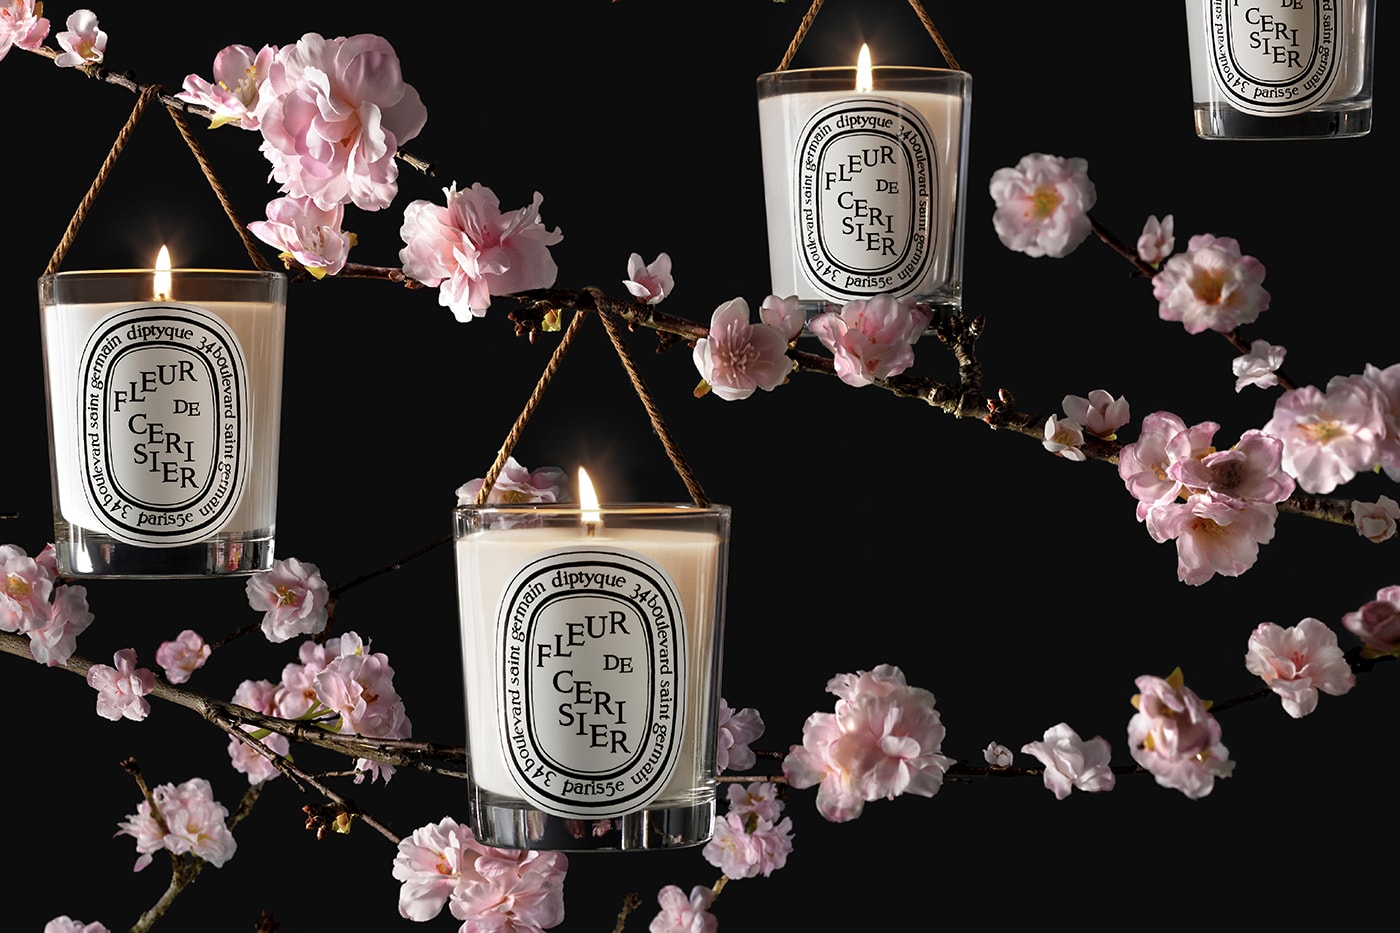 Diptyque Fleur de Cerisier (Cherry Blossom) Candle Release Info Date Buy Price 